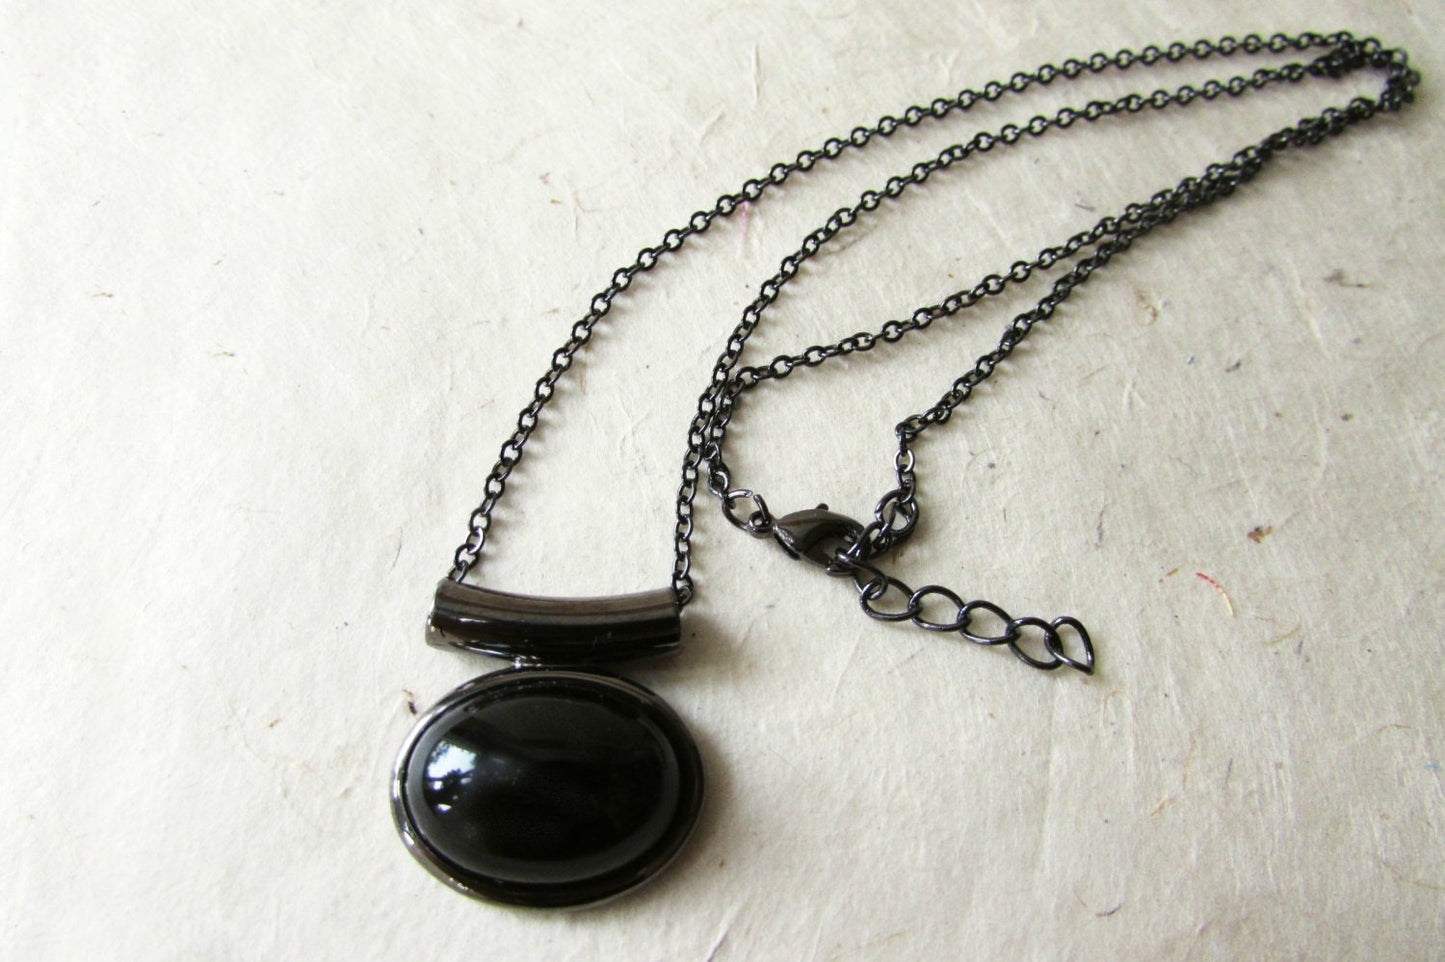 Jet Black Gemstone Necklace, Black Onyx Necklace, Minimalist Natural Stone Pendant Necklace, Onyx Cabochon Necklace in Gunmetal Silver